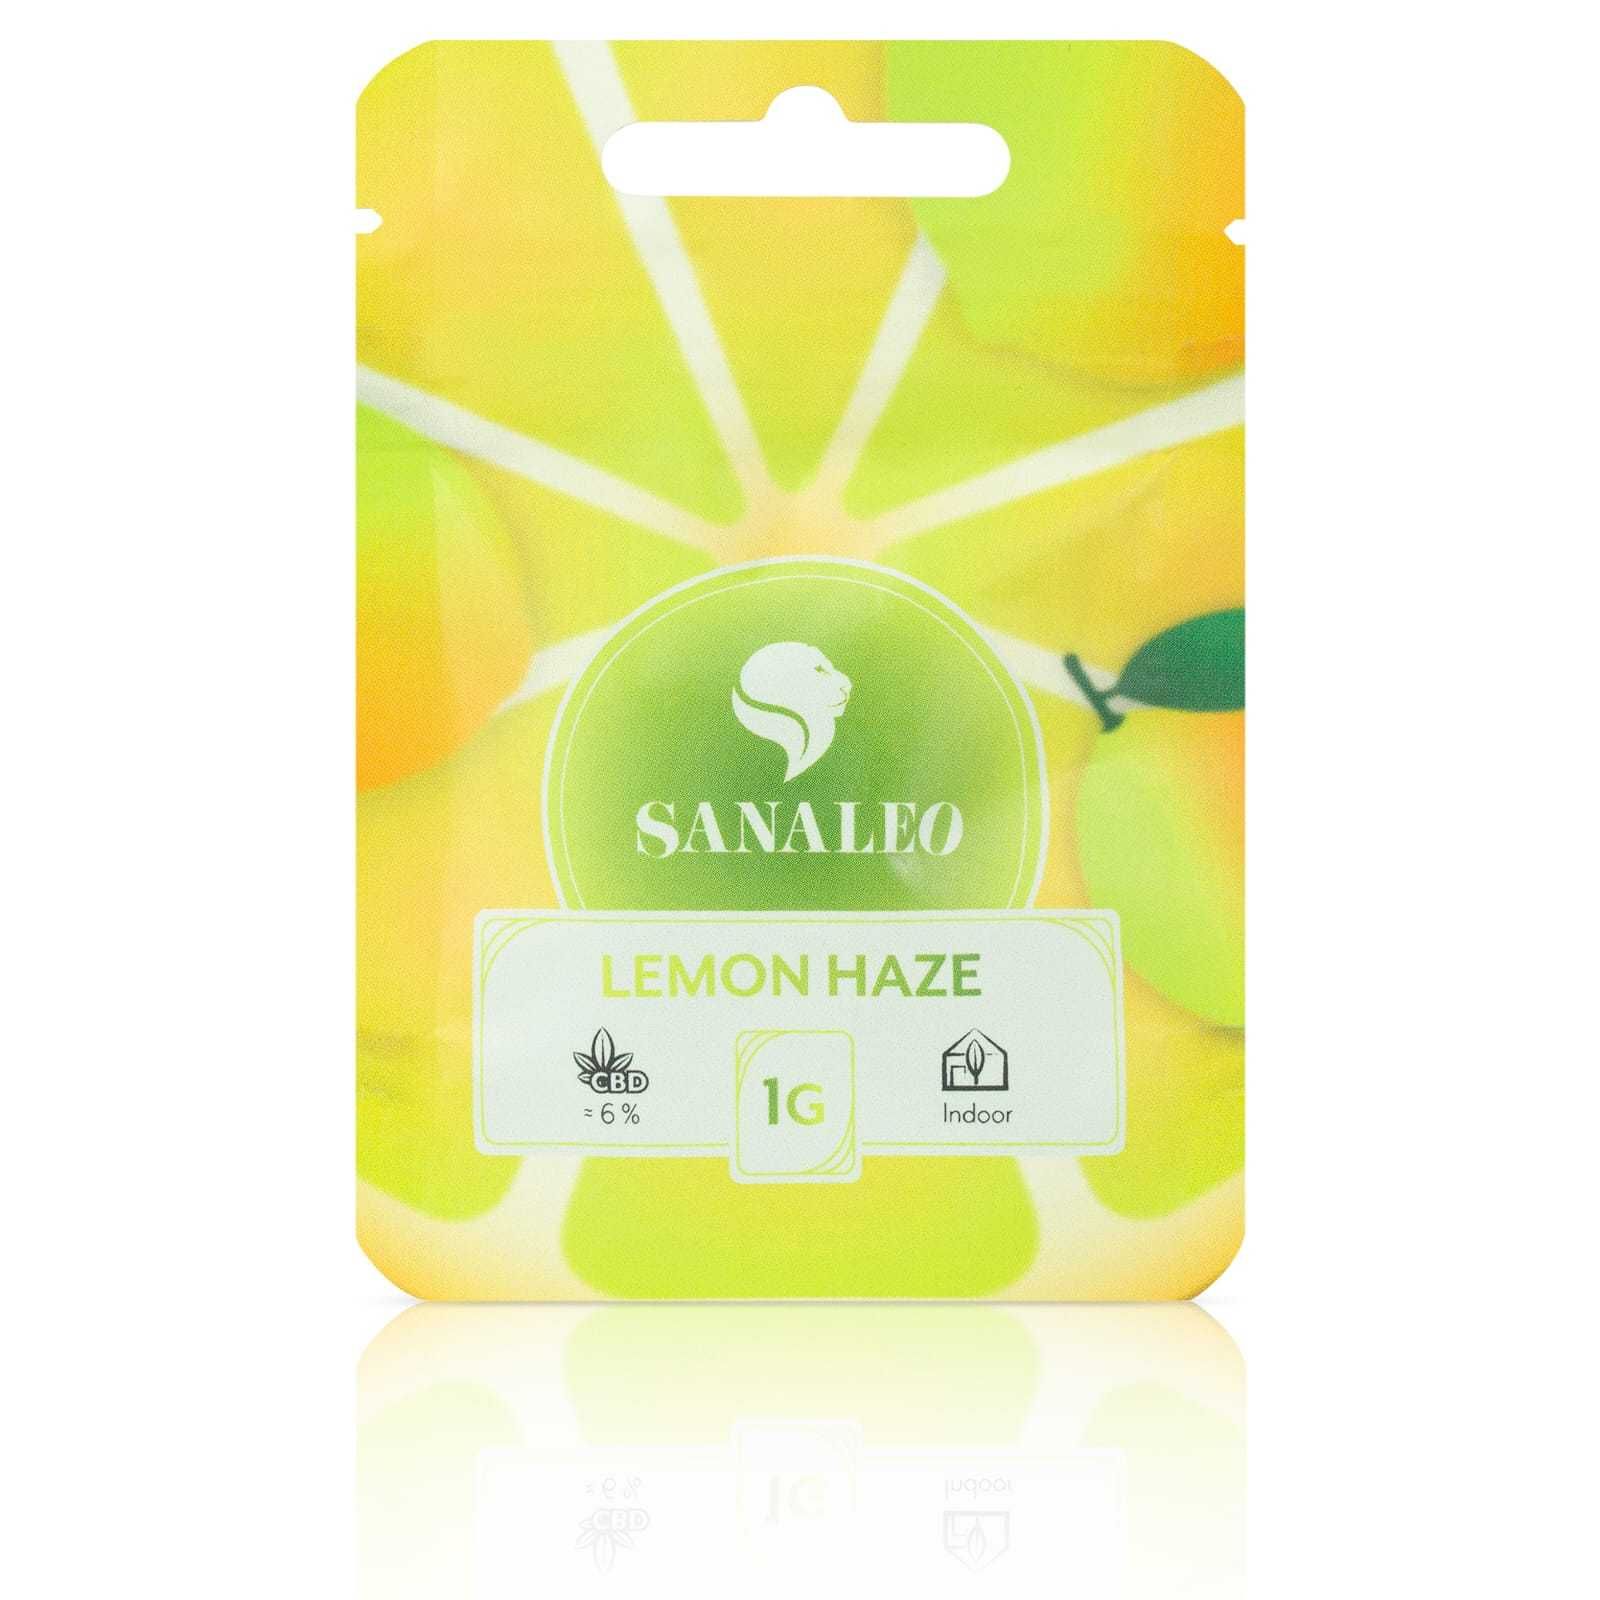 Susz CBD | Premium Quality | SANALEO | Lemon Haze ~6% CBD | 1 gram